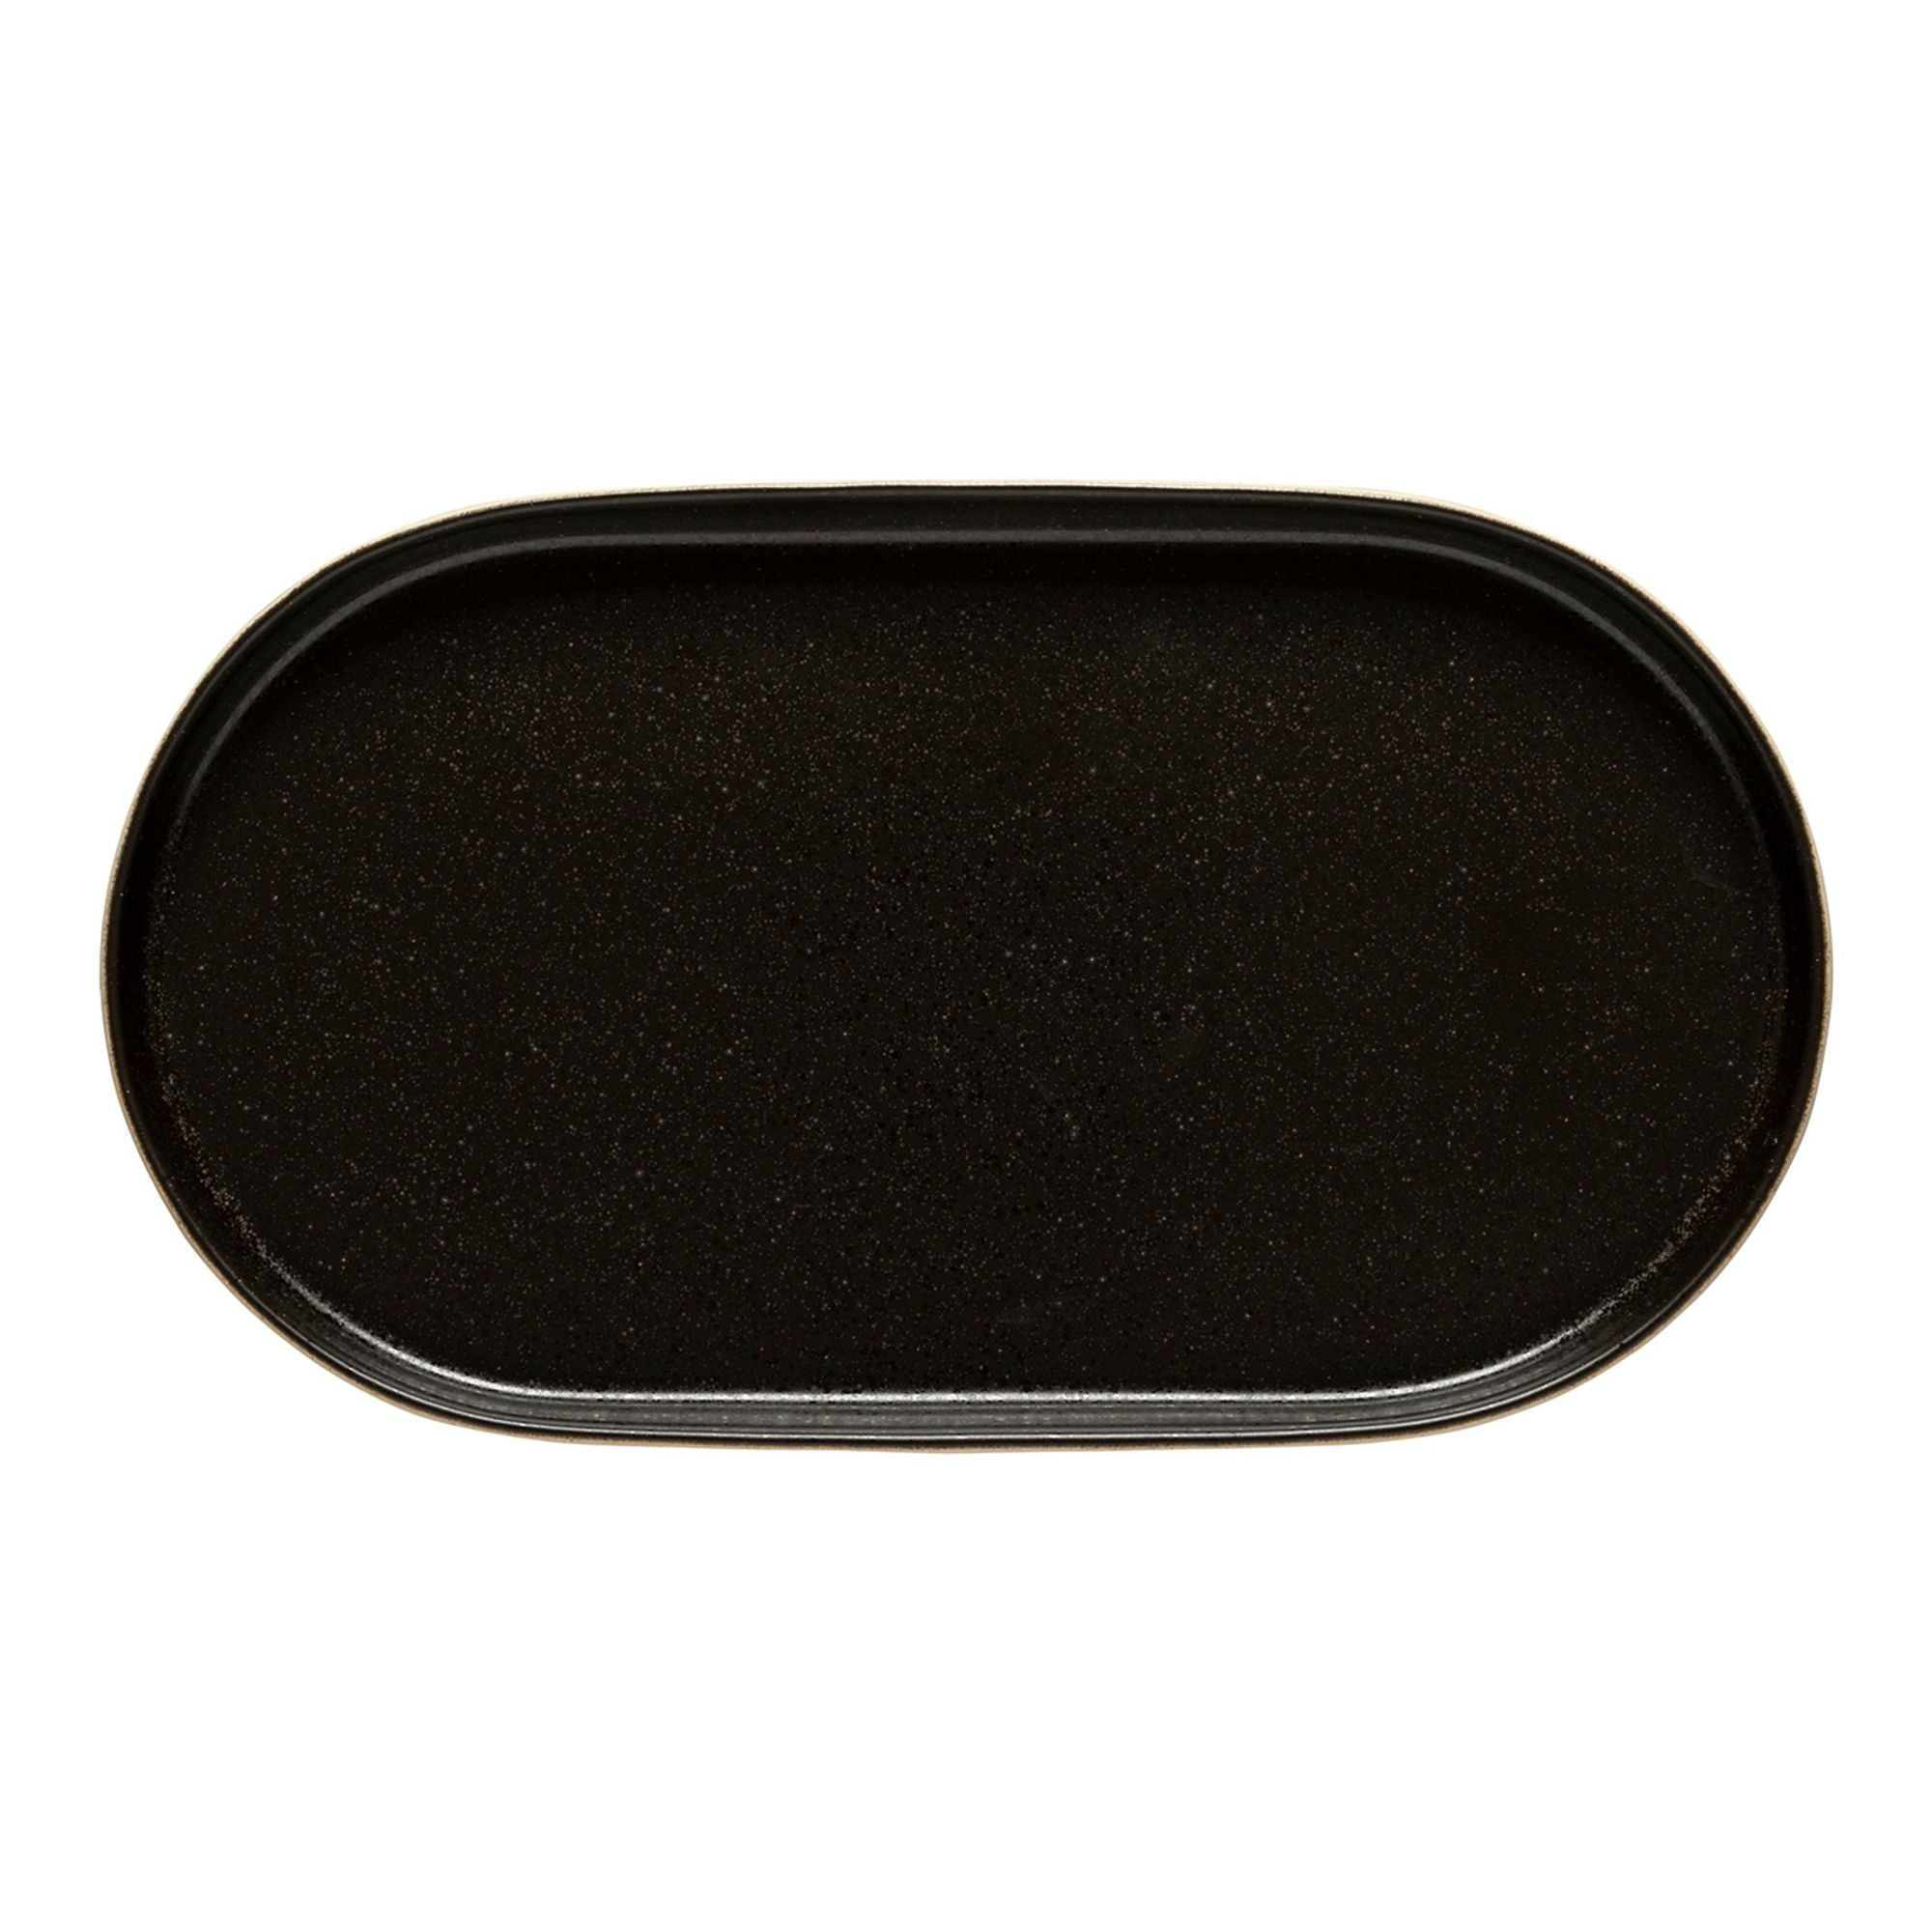 Nótos Oval Platter 15" Latitude Black